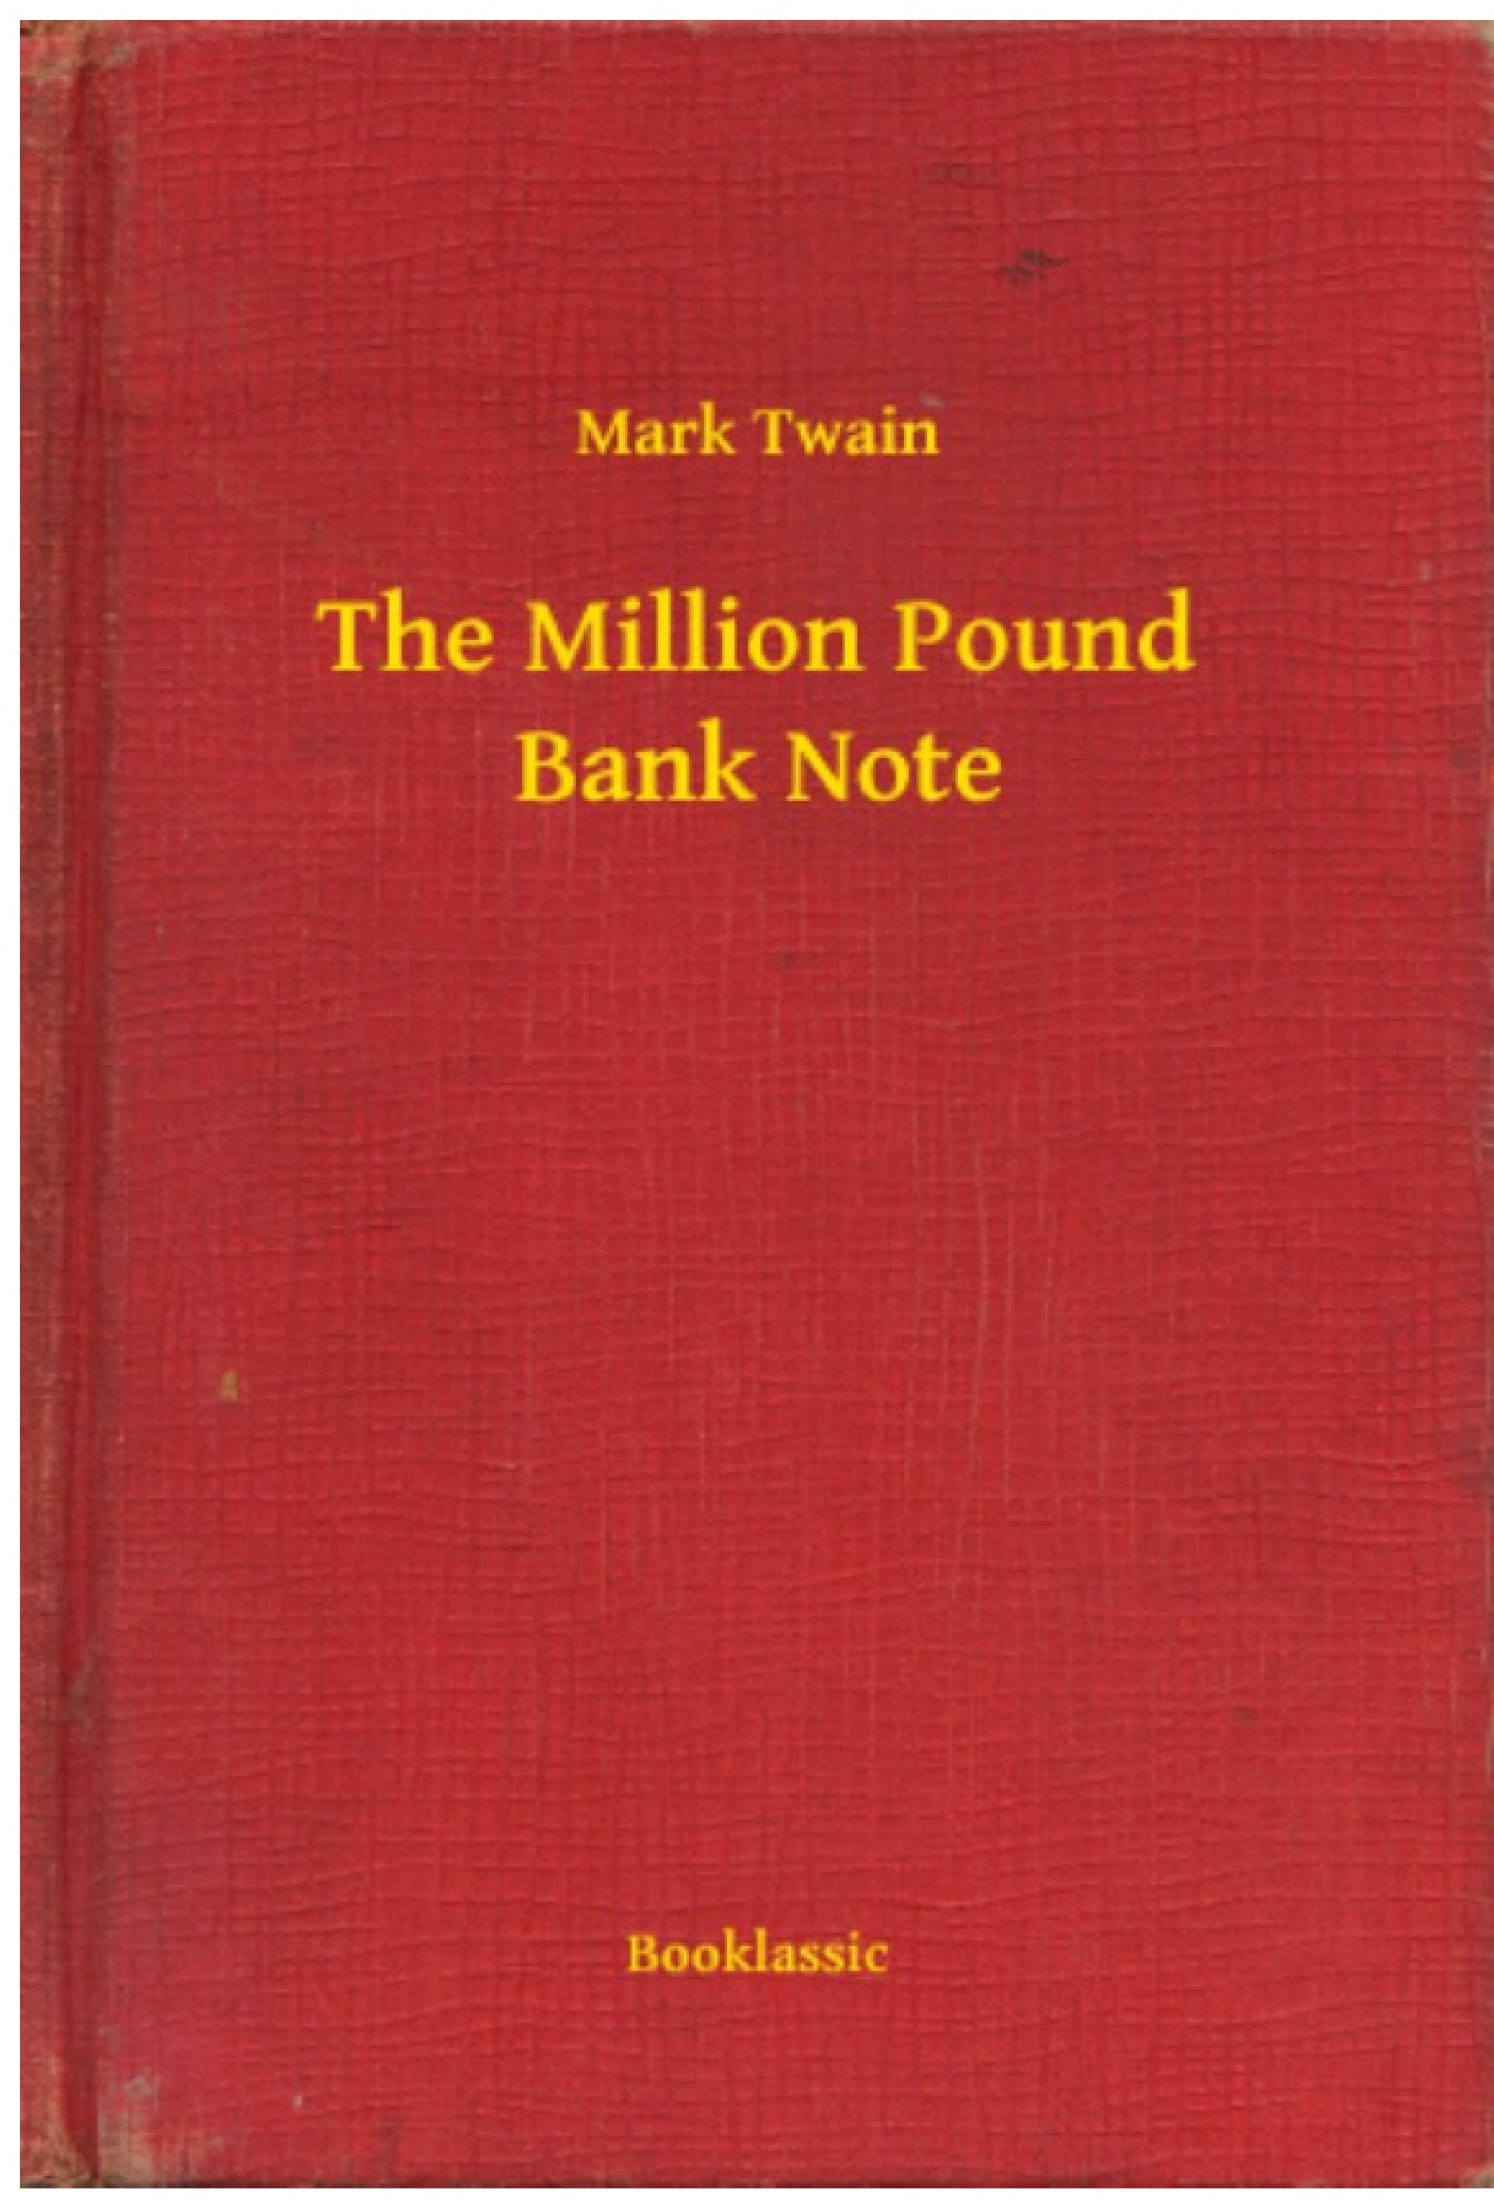 The Million Pound Bank Note